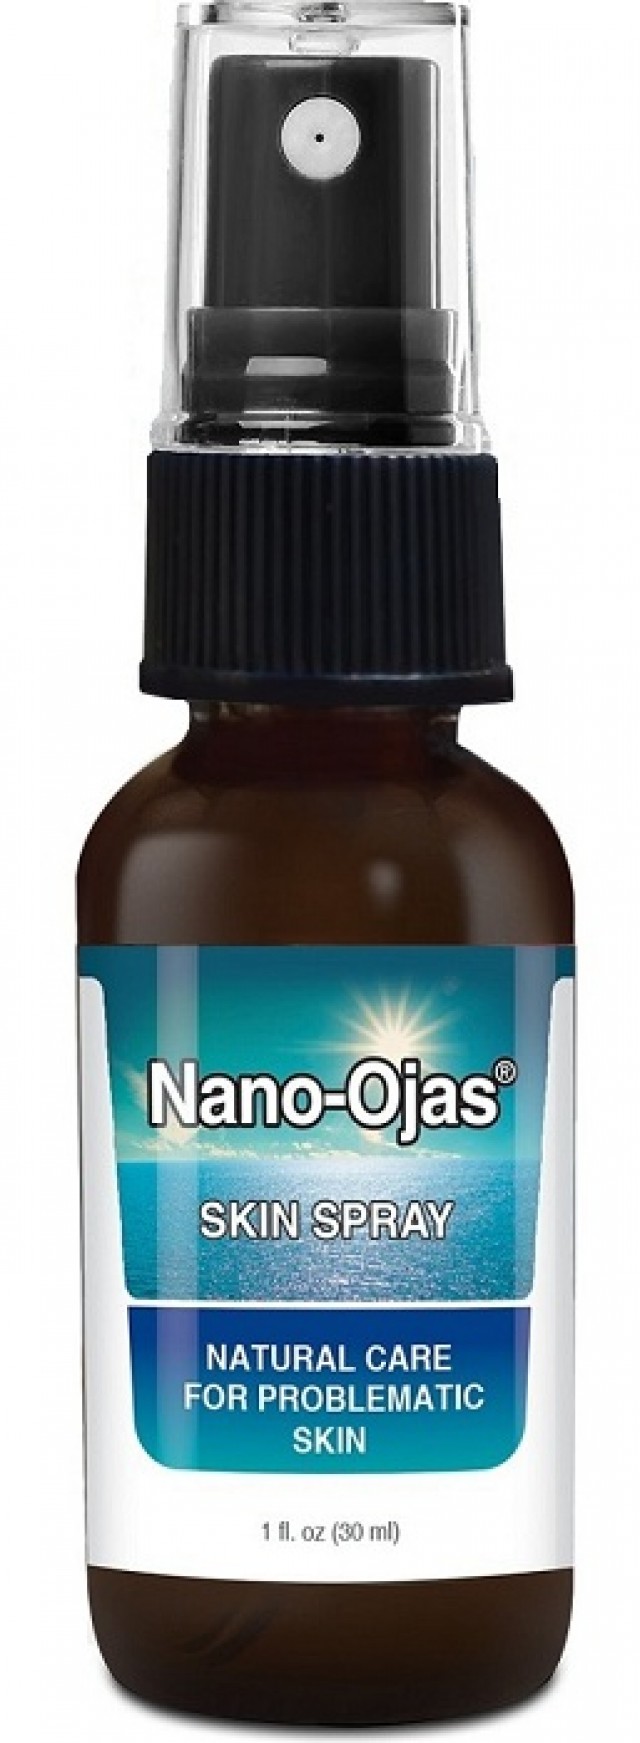 Nano-Ojas® Skin Spray - Natural Care for Problematic Skin